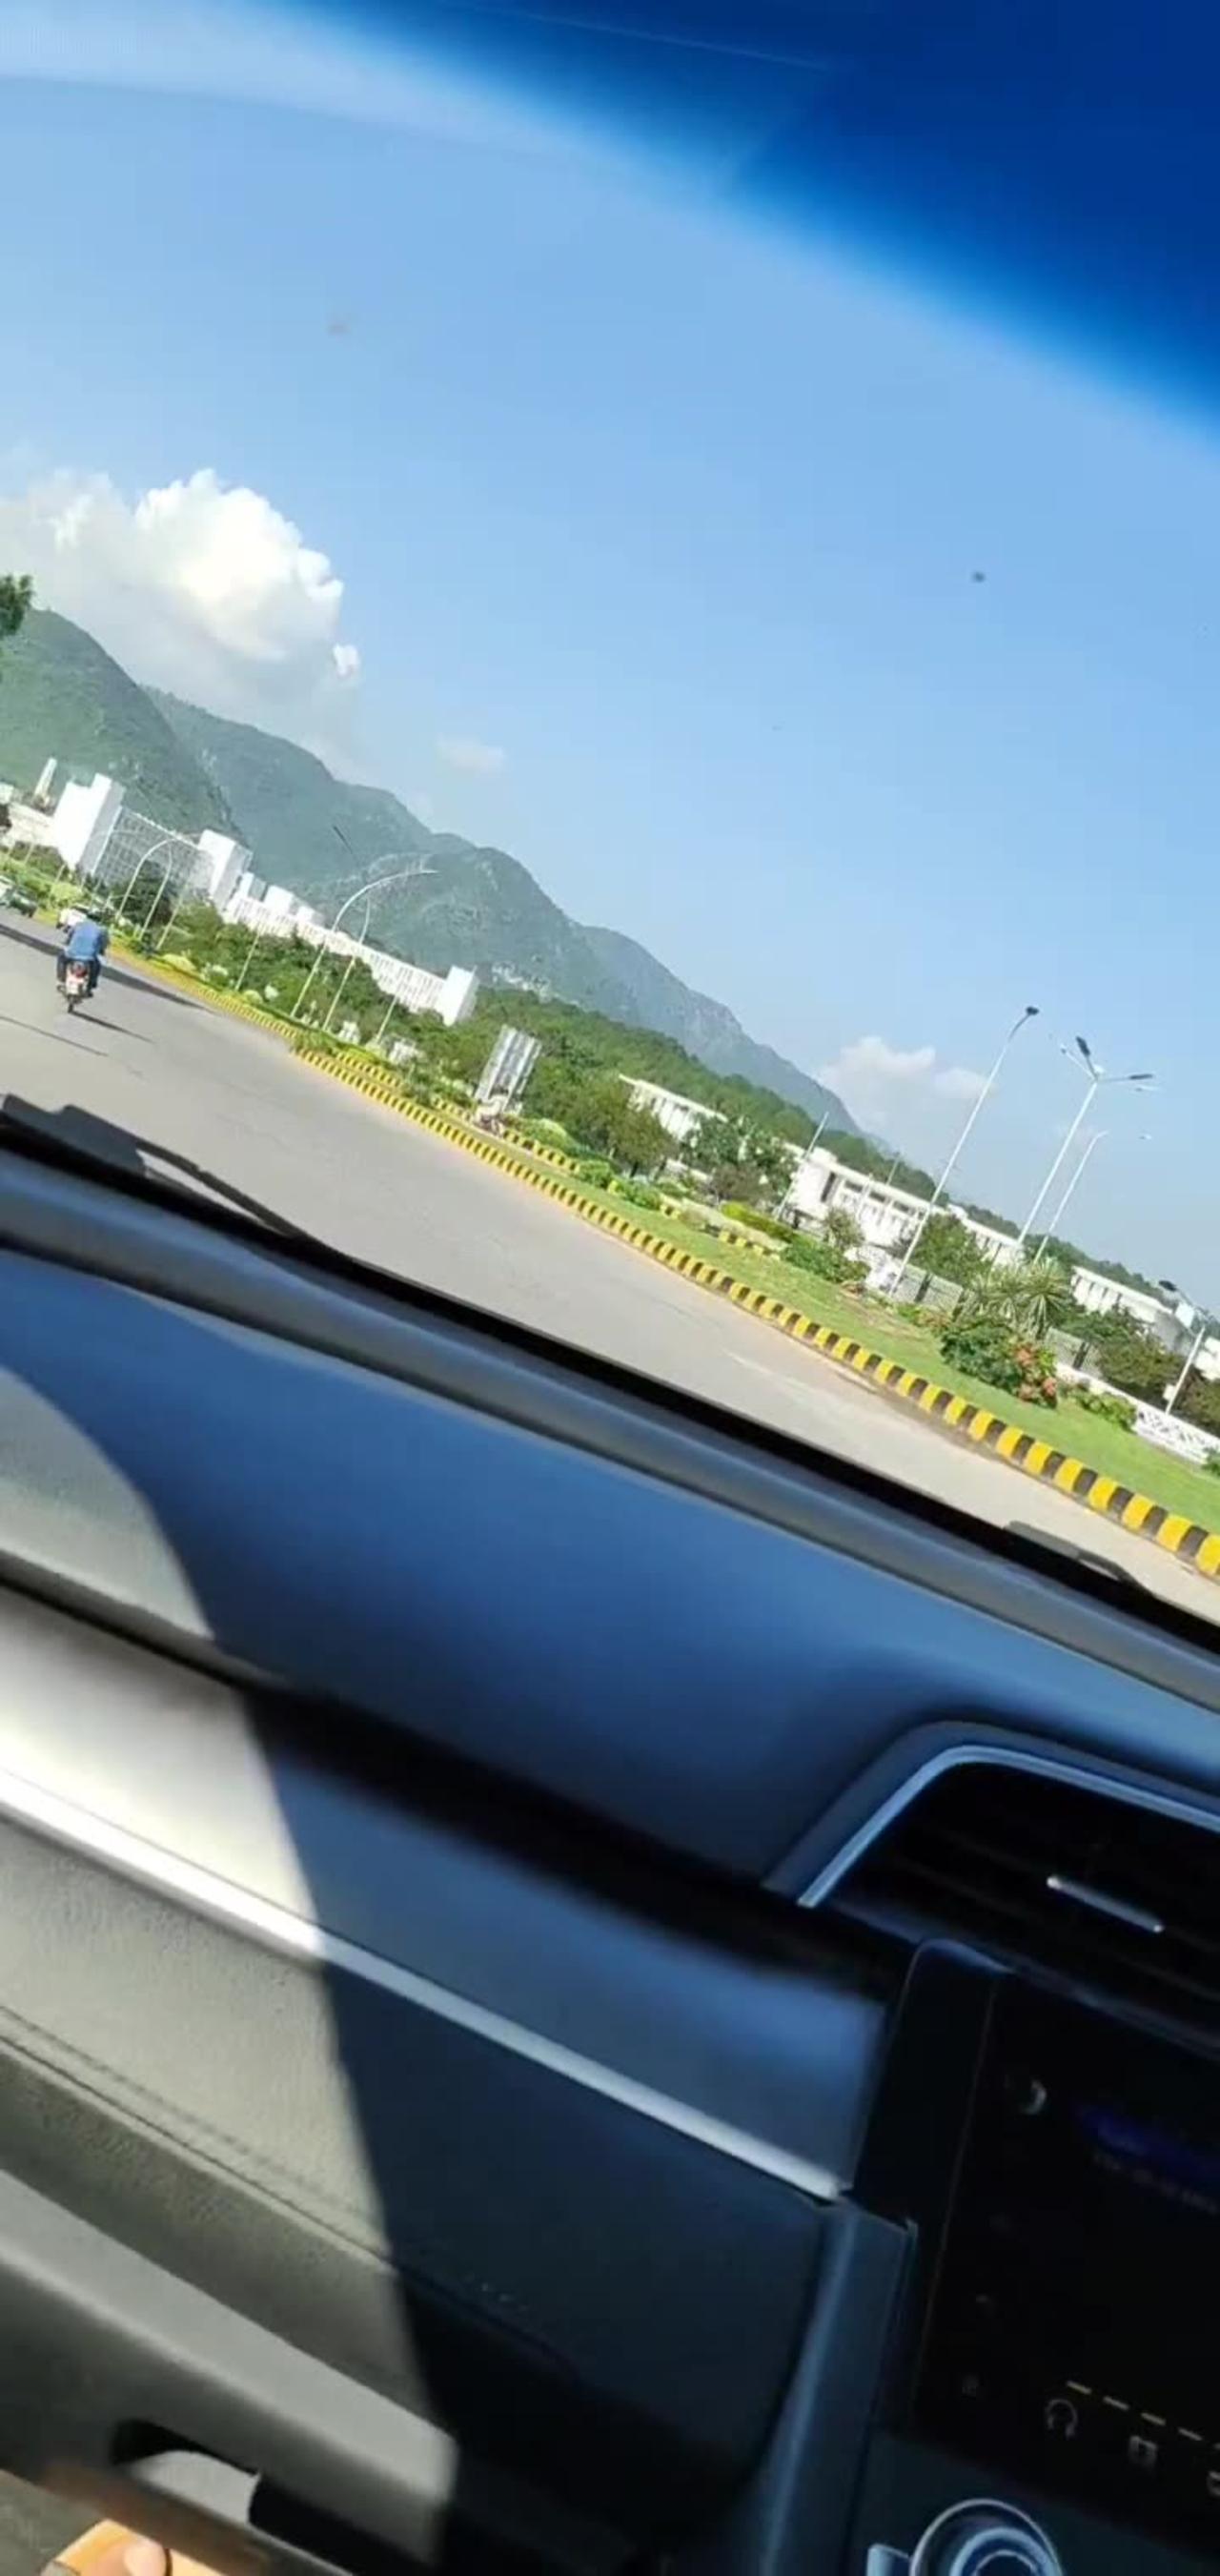 Capital of Pakistan, Islamabad! - One News Page VIDEO